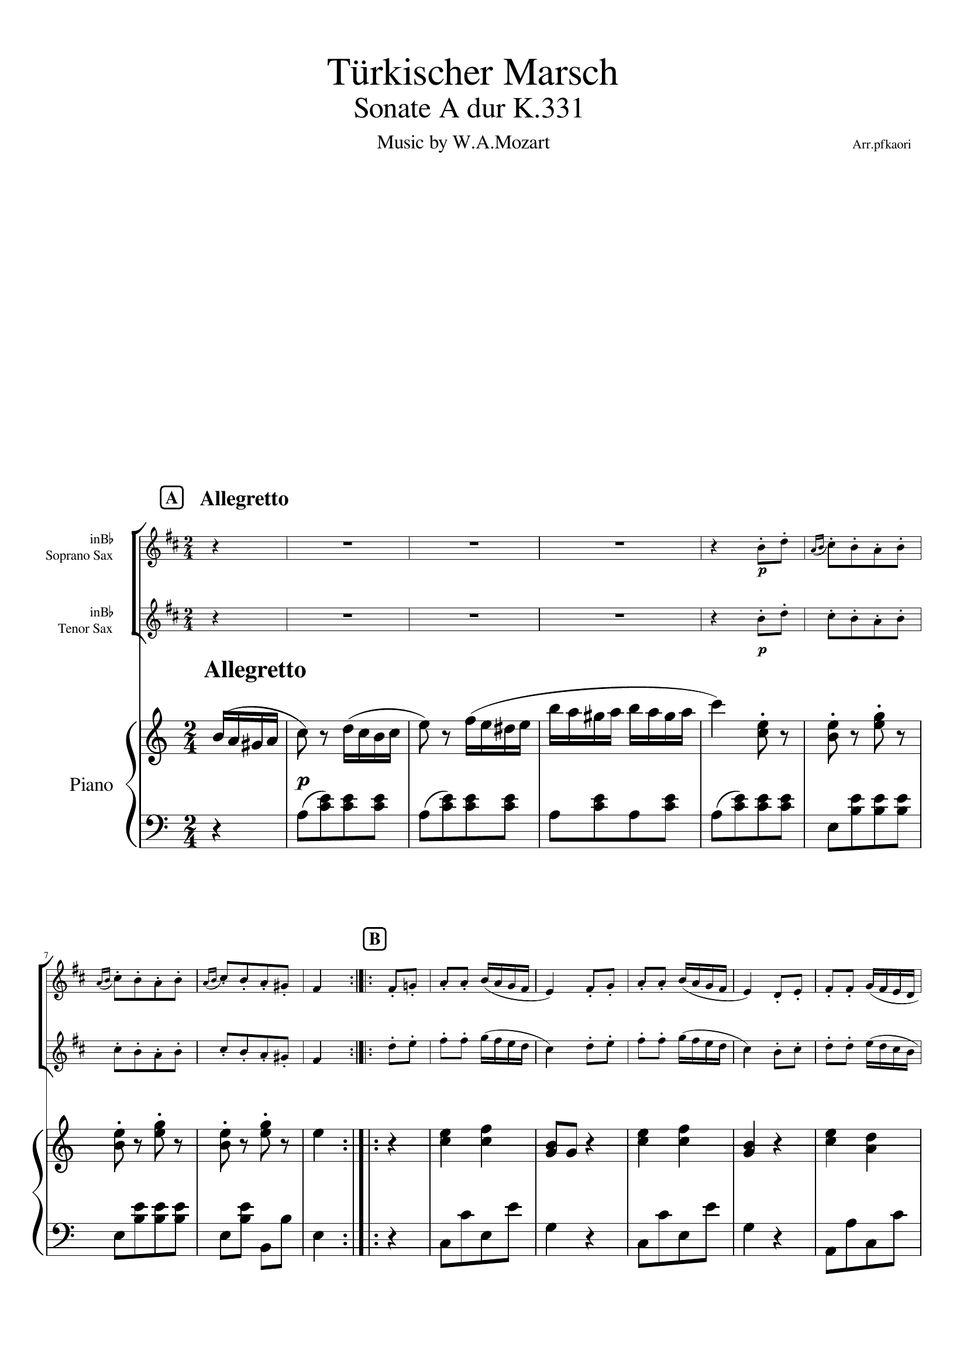 Mozart - Turkish March (Soprano Sax & Tenor Sax-pianotrio) by pfkaori